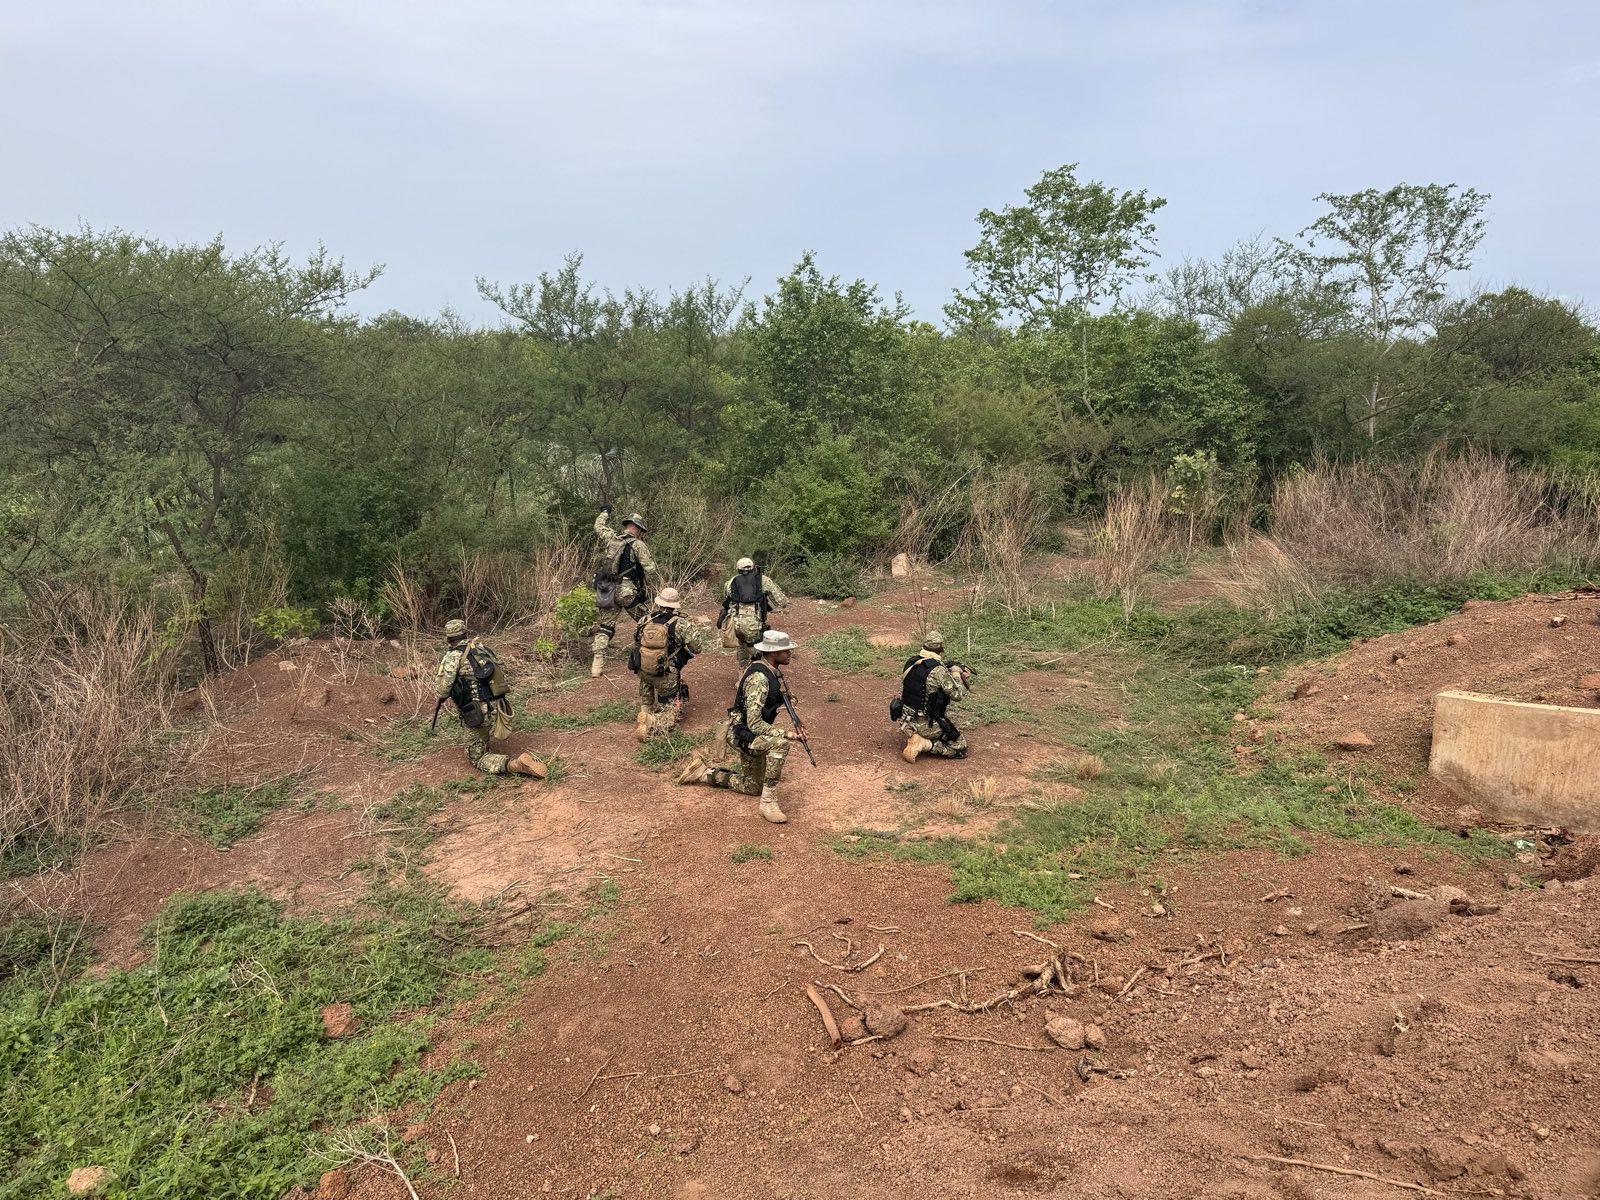 Cape Verde personnel on target practice